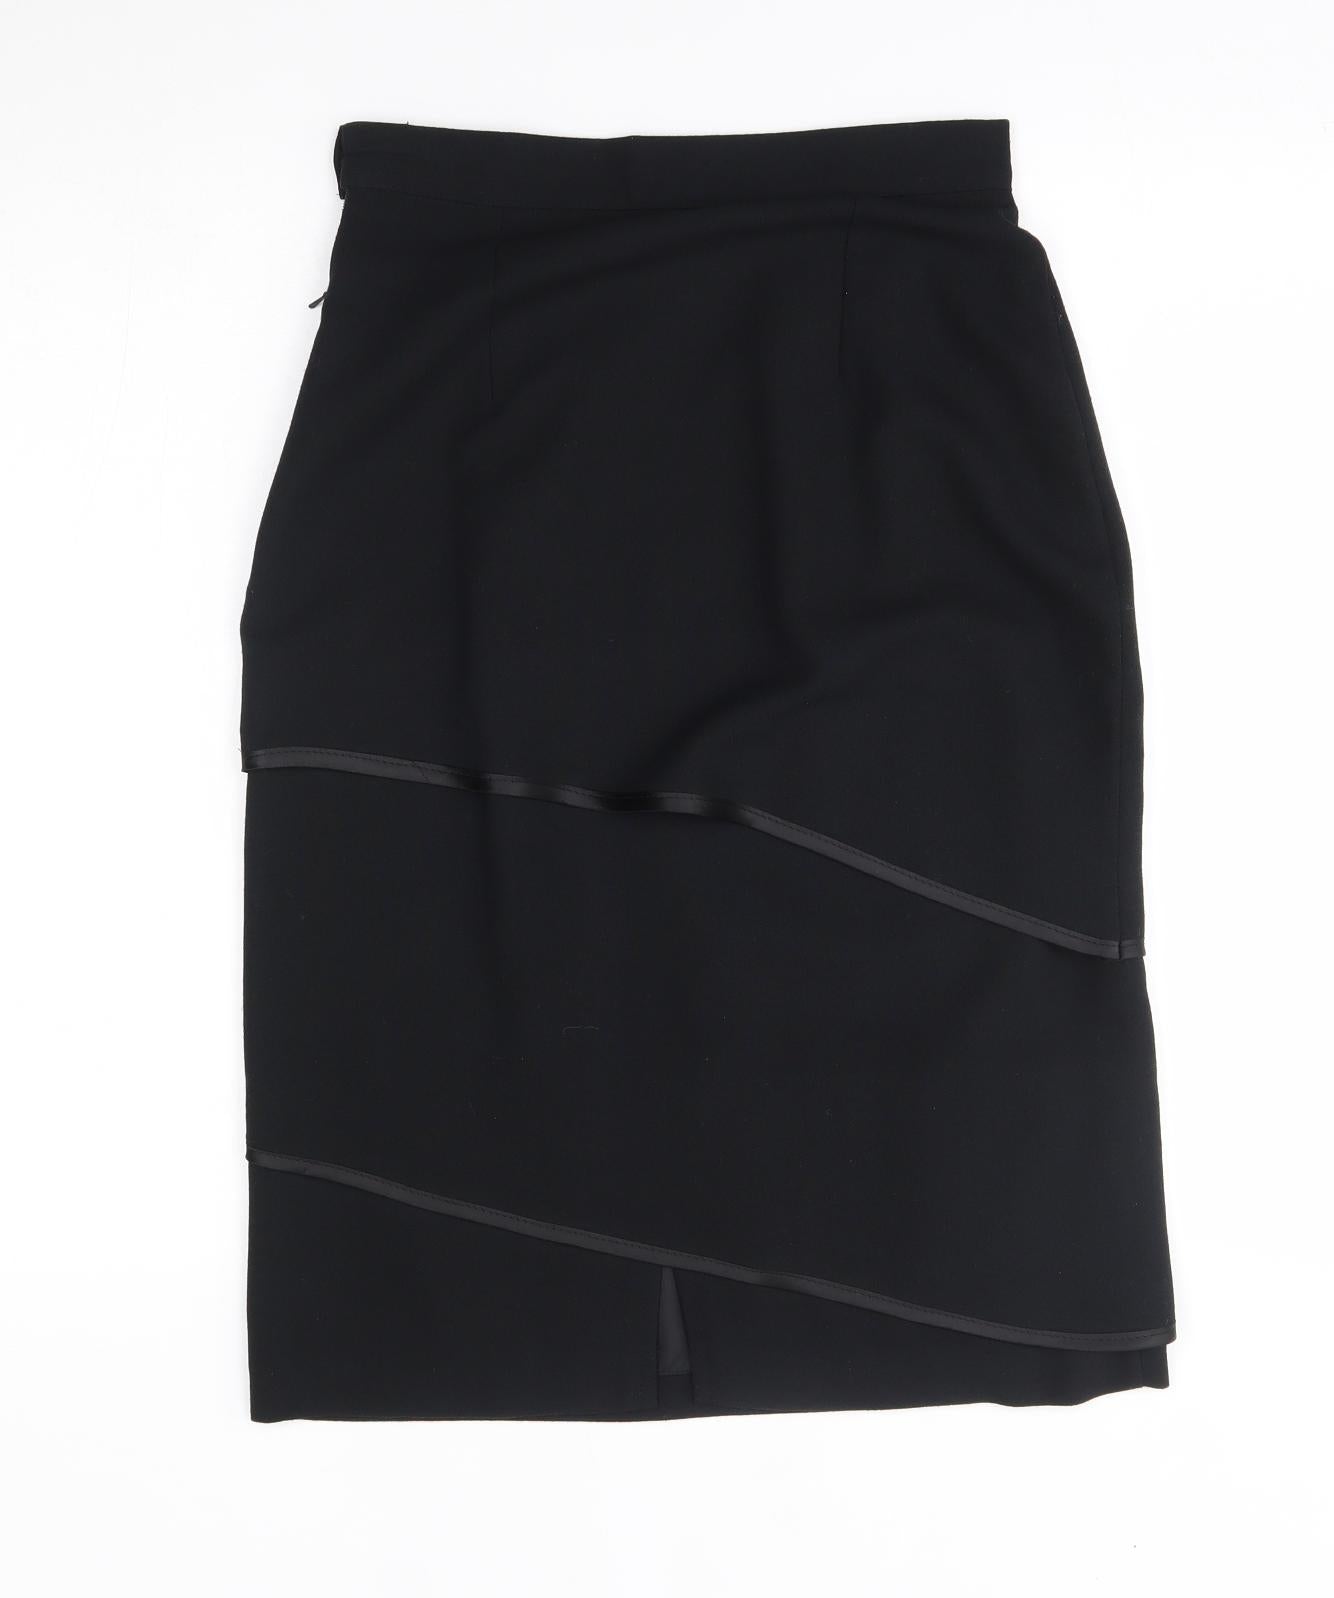 Your Sixth Sense Womens Black   A-Line Skirt Size 10